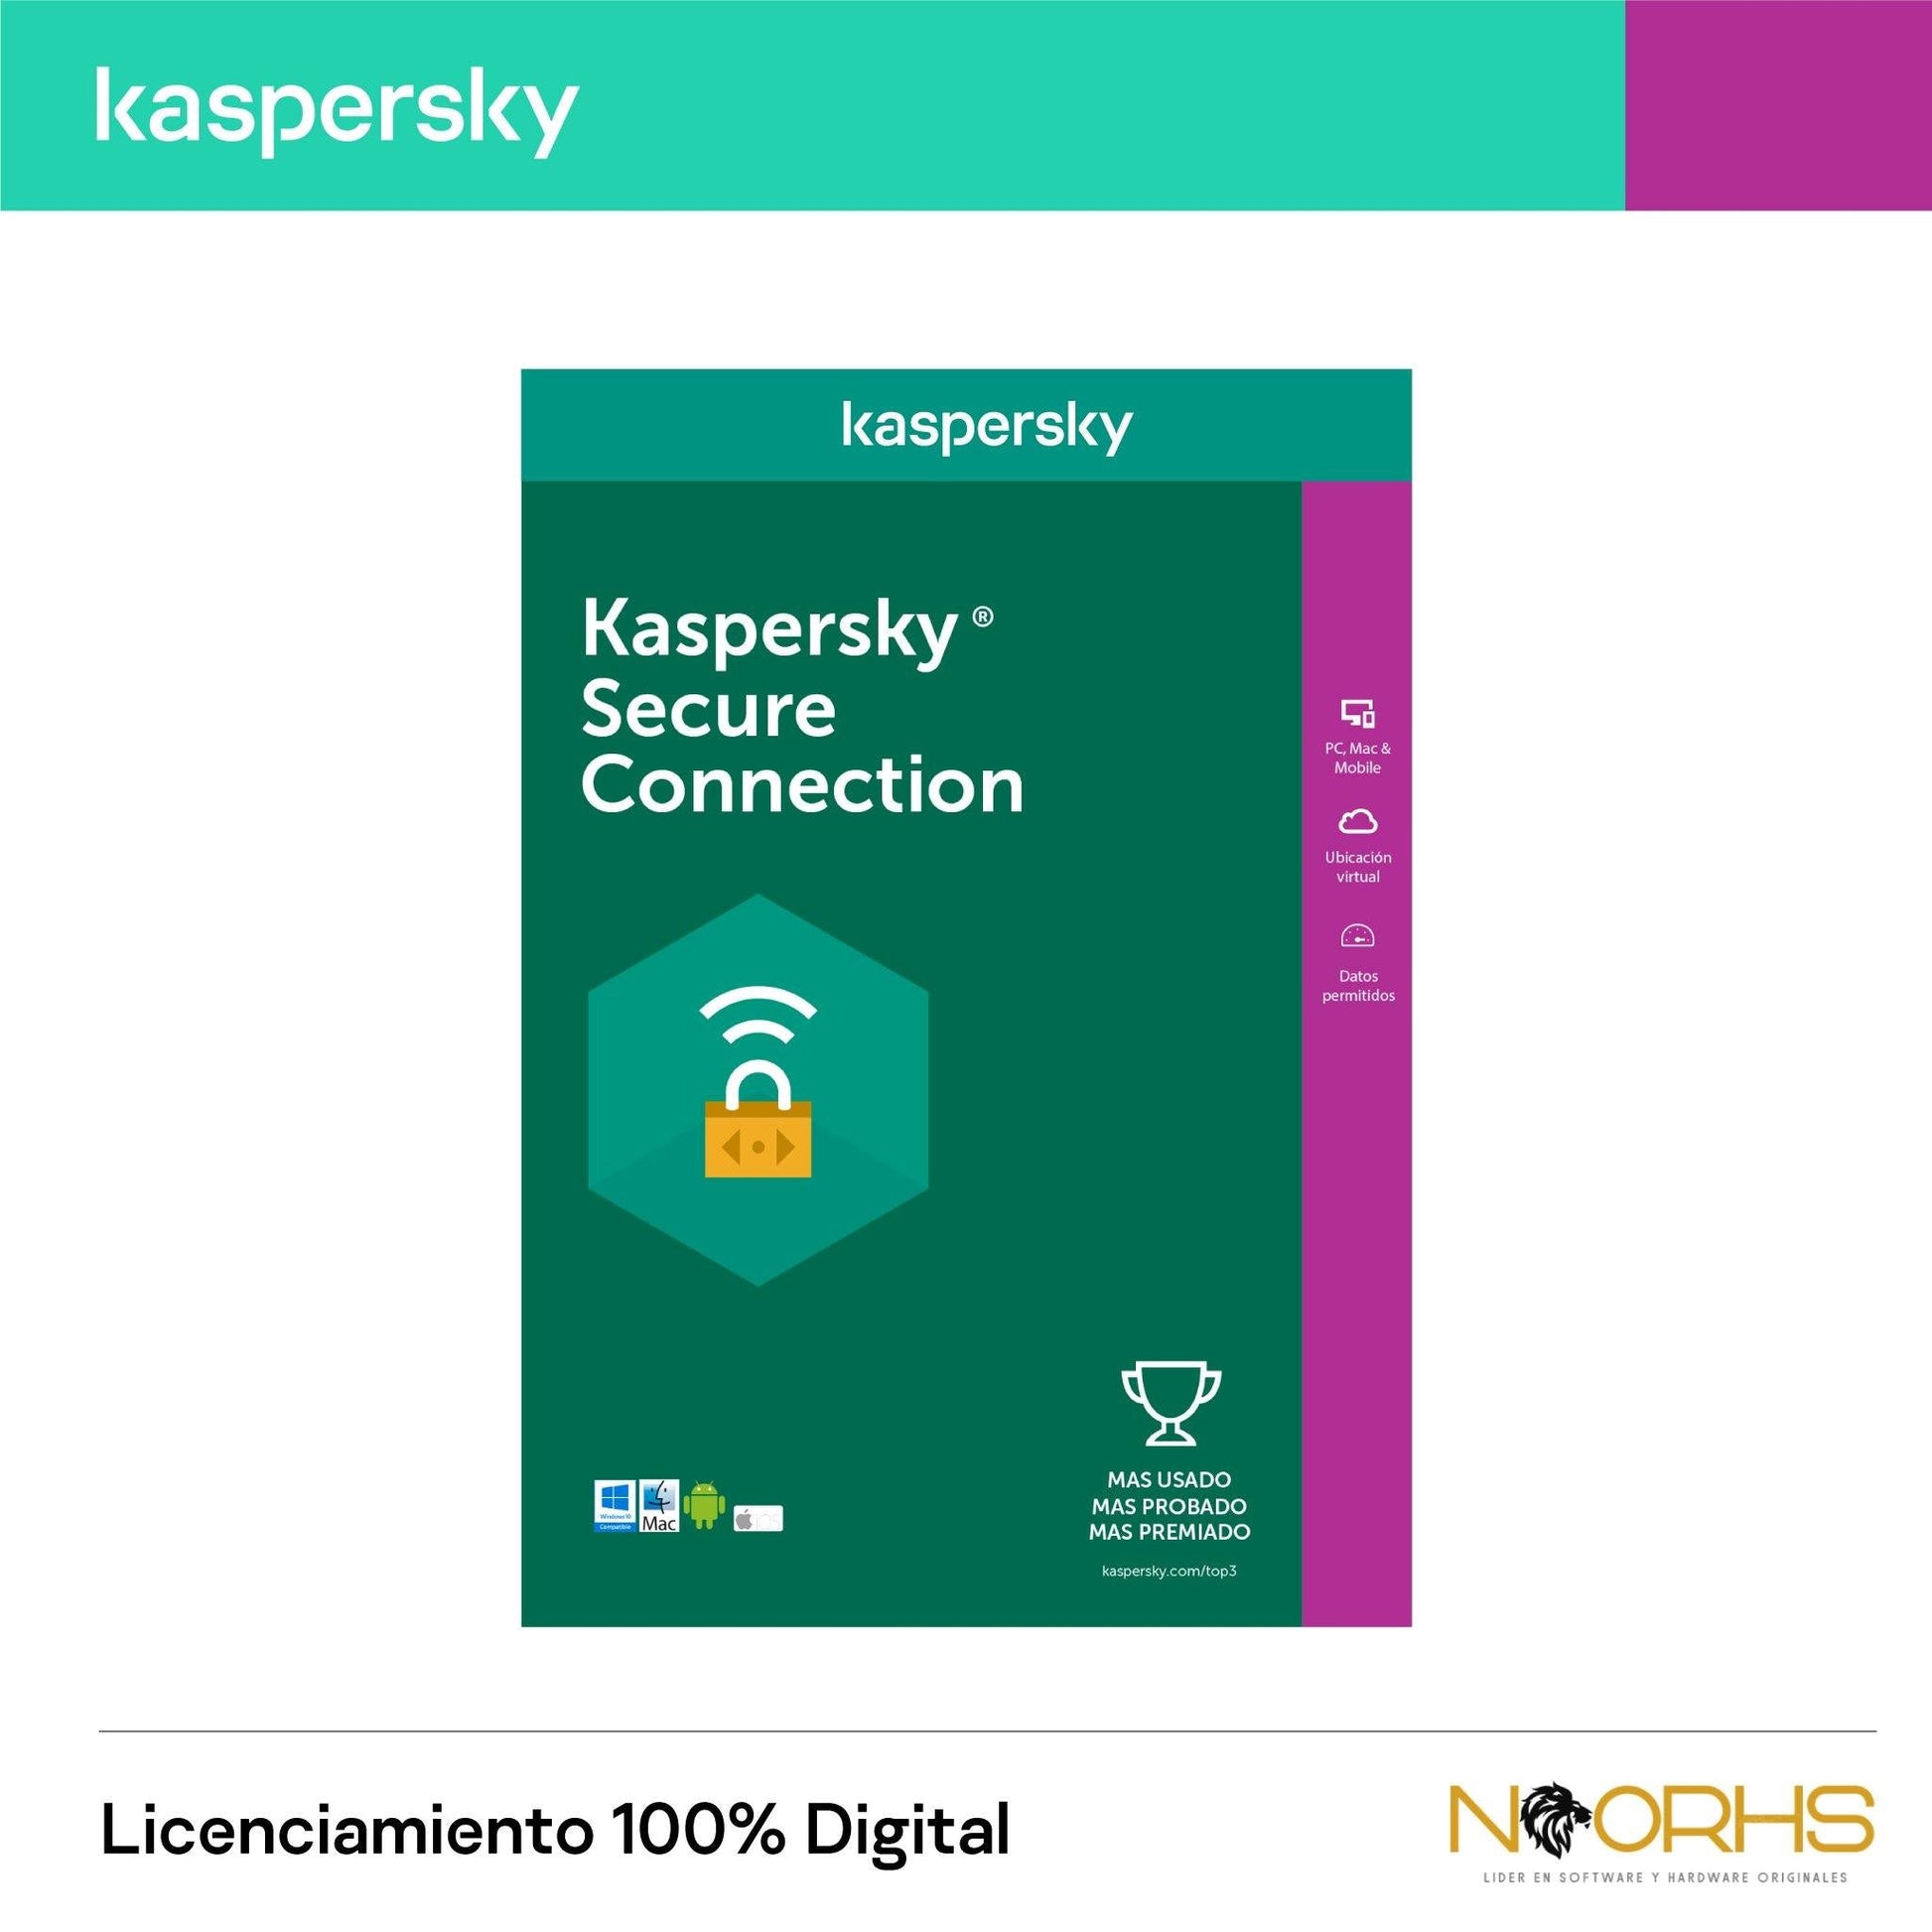 Kaspersky Secure Connection 1 Usuario 5 Dispositivos 1 Año base - NOORHS Latinoamérica, S.A. de C.V.